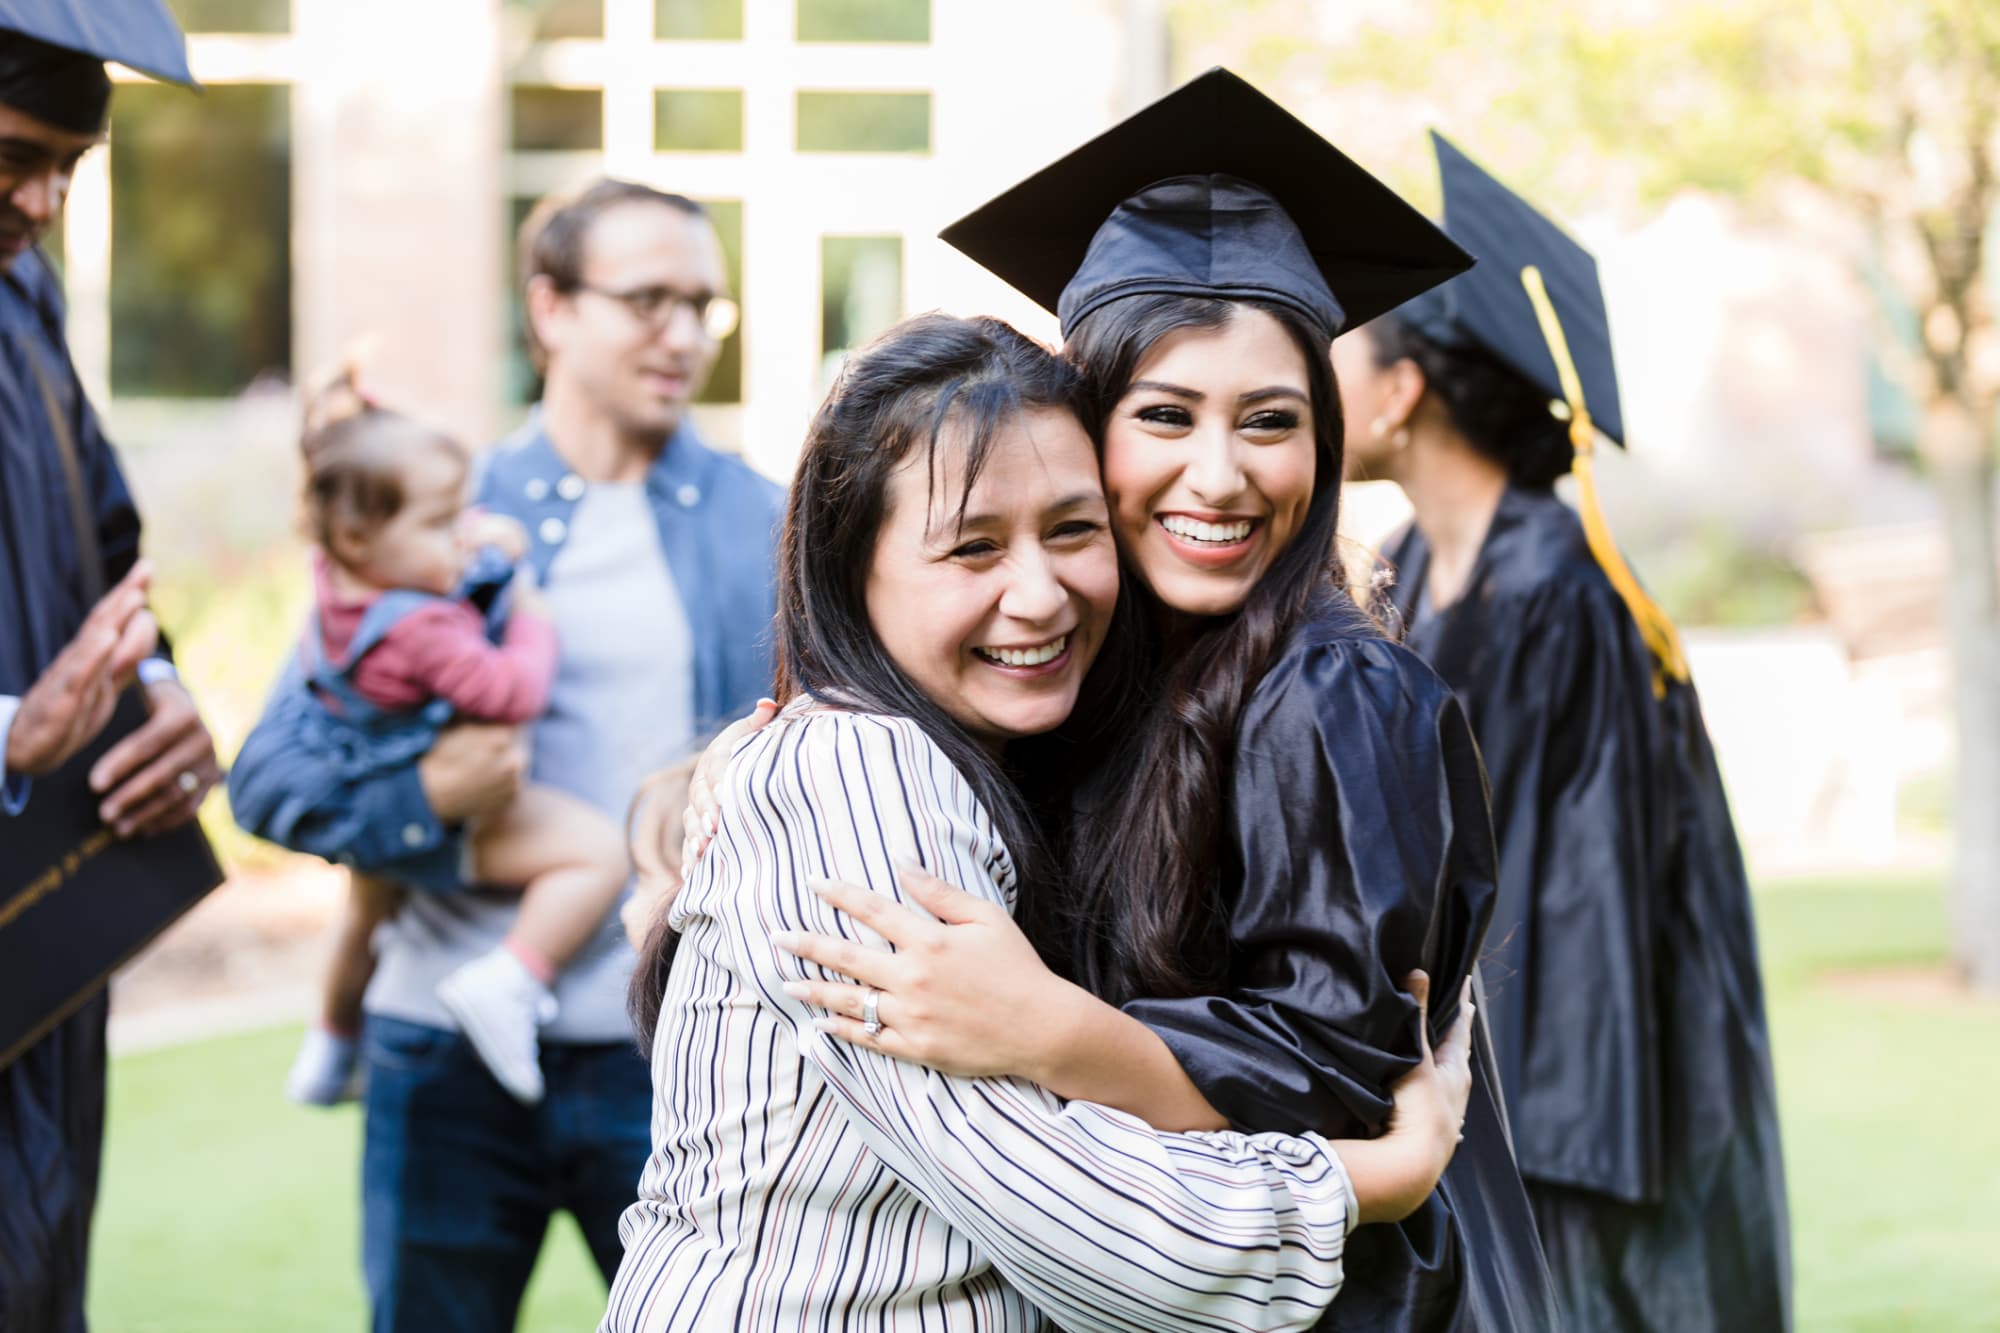 https://res.cloudinary.com/highereducation/images/f_auto,q_auto/v1685973572/NurseJournal.org/Nursing-student-graduating-college-family-hugging/Nursing-student-graduating-college-family-hugging.jpg?_i=AA